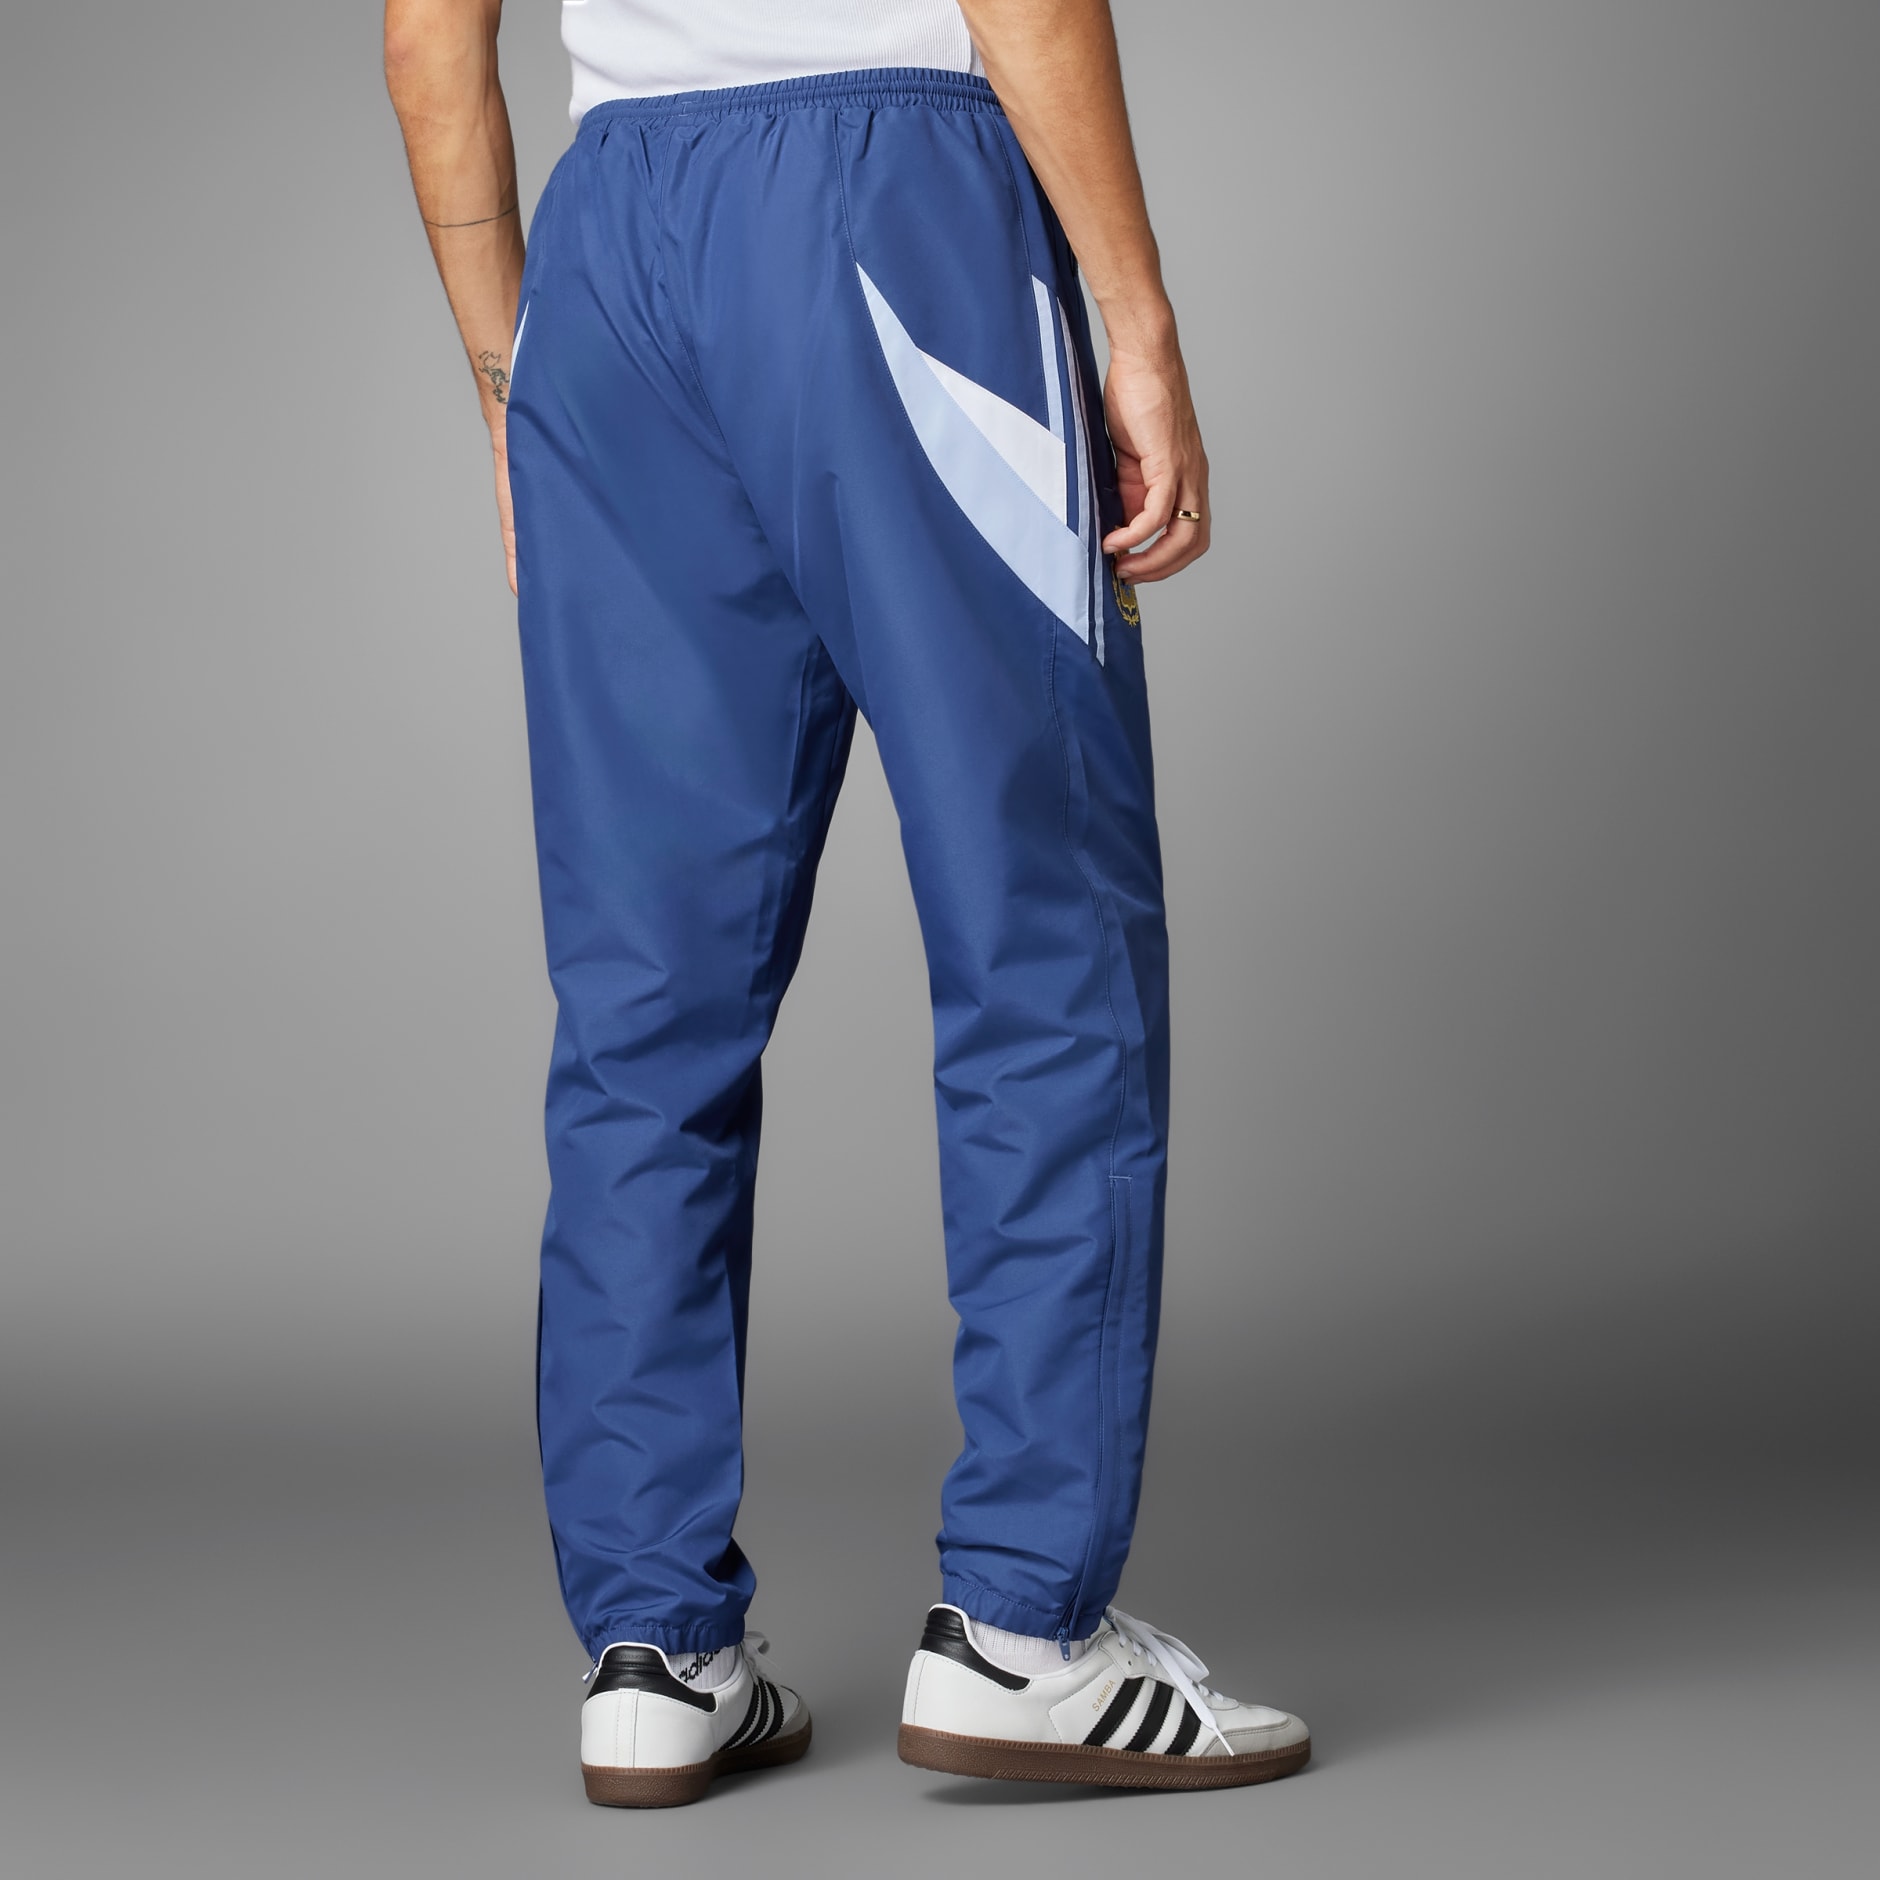 Adidas Band Track Pants for Women | Mercari